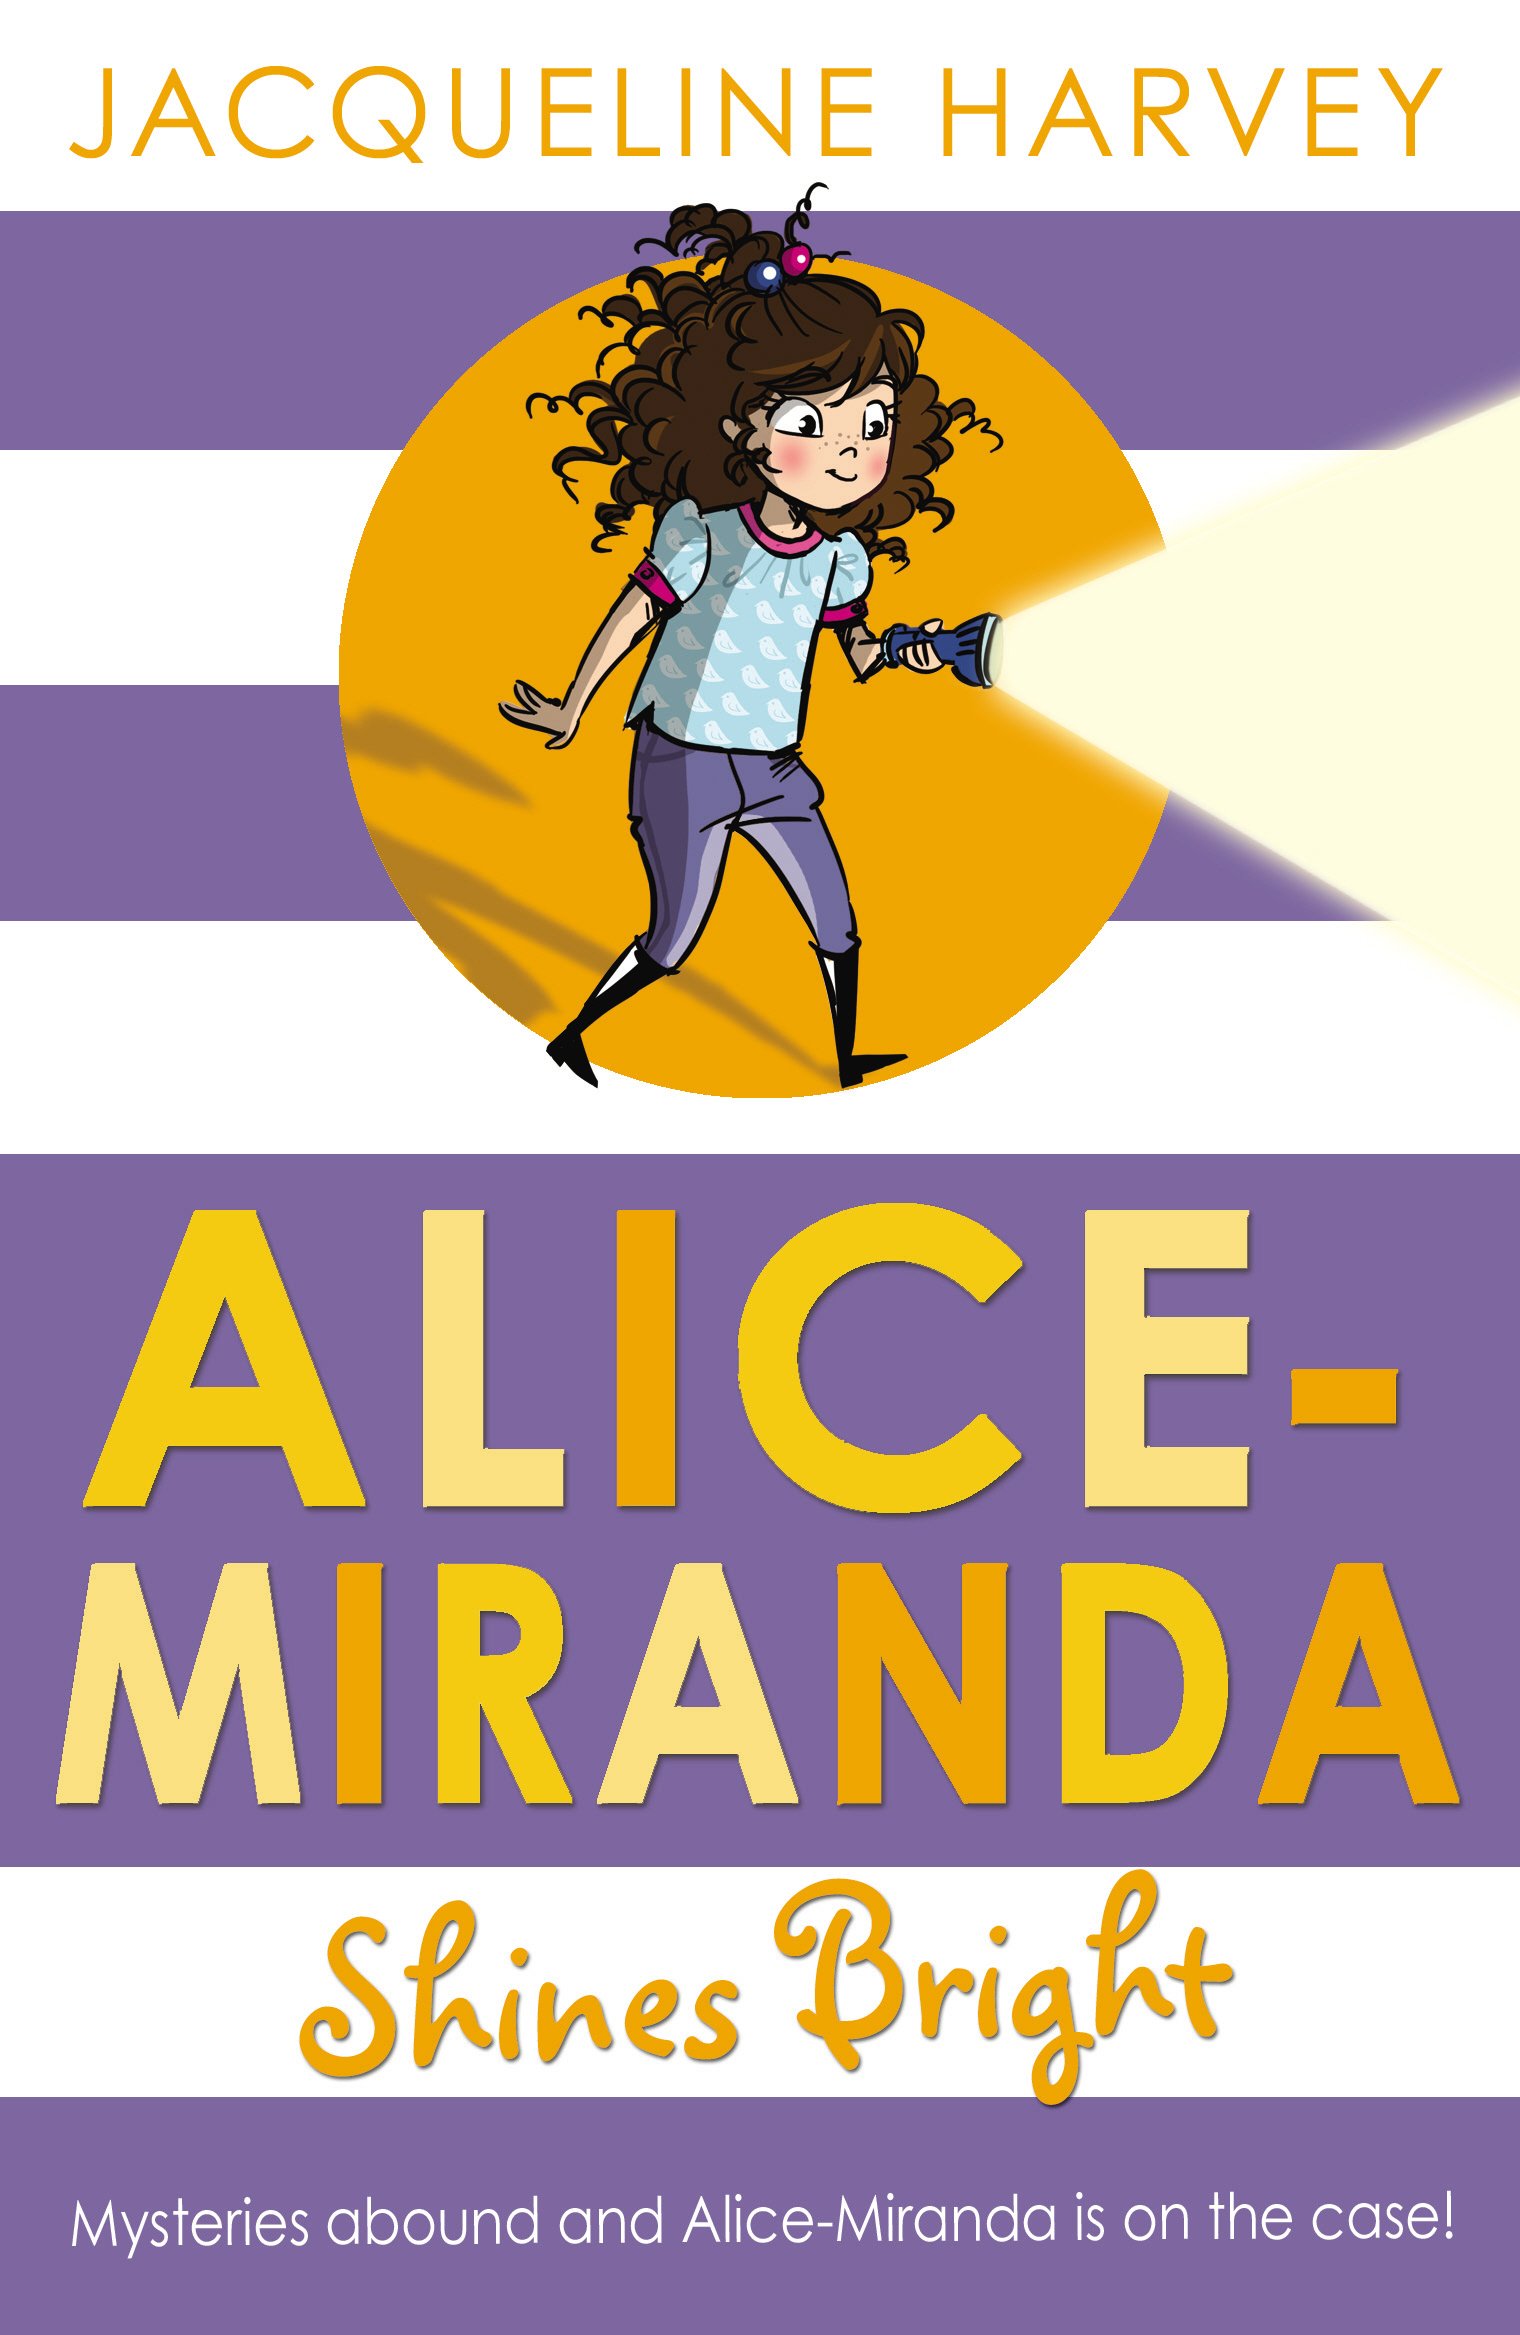 Alice-Miranda Shines Bright (#8)- Jacqueline Harvey